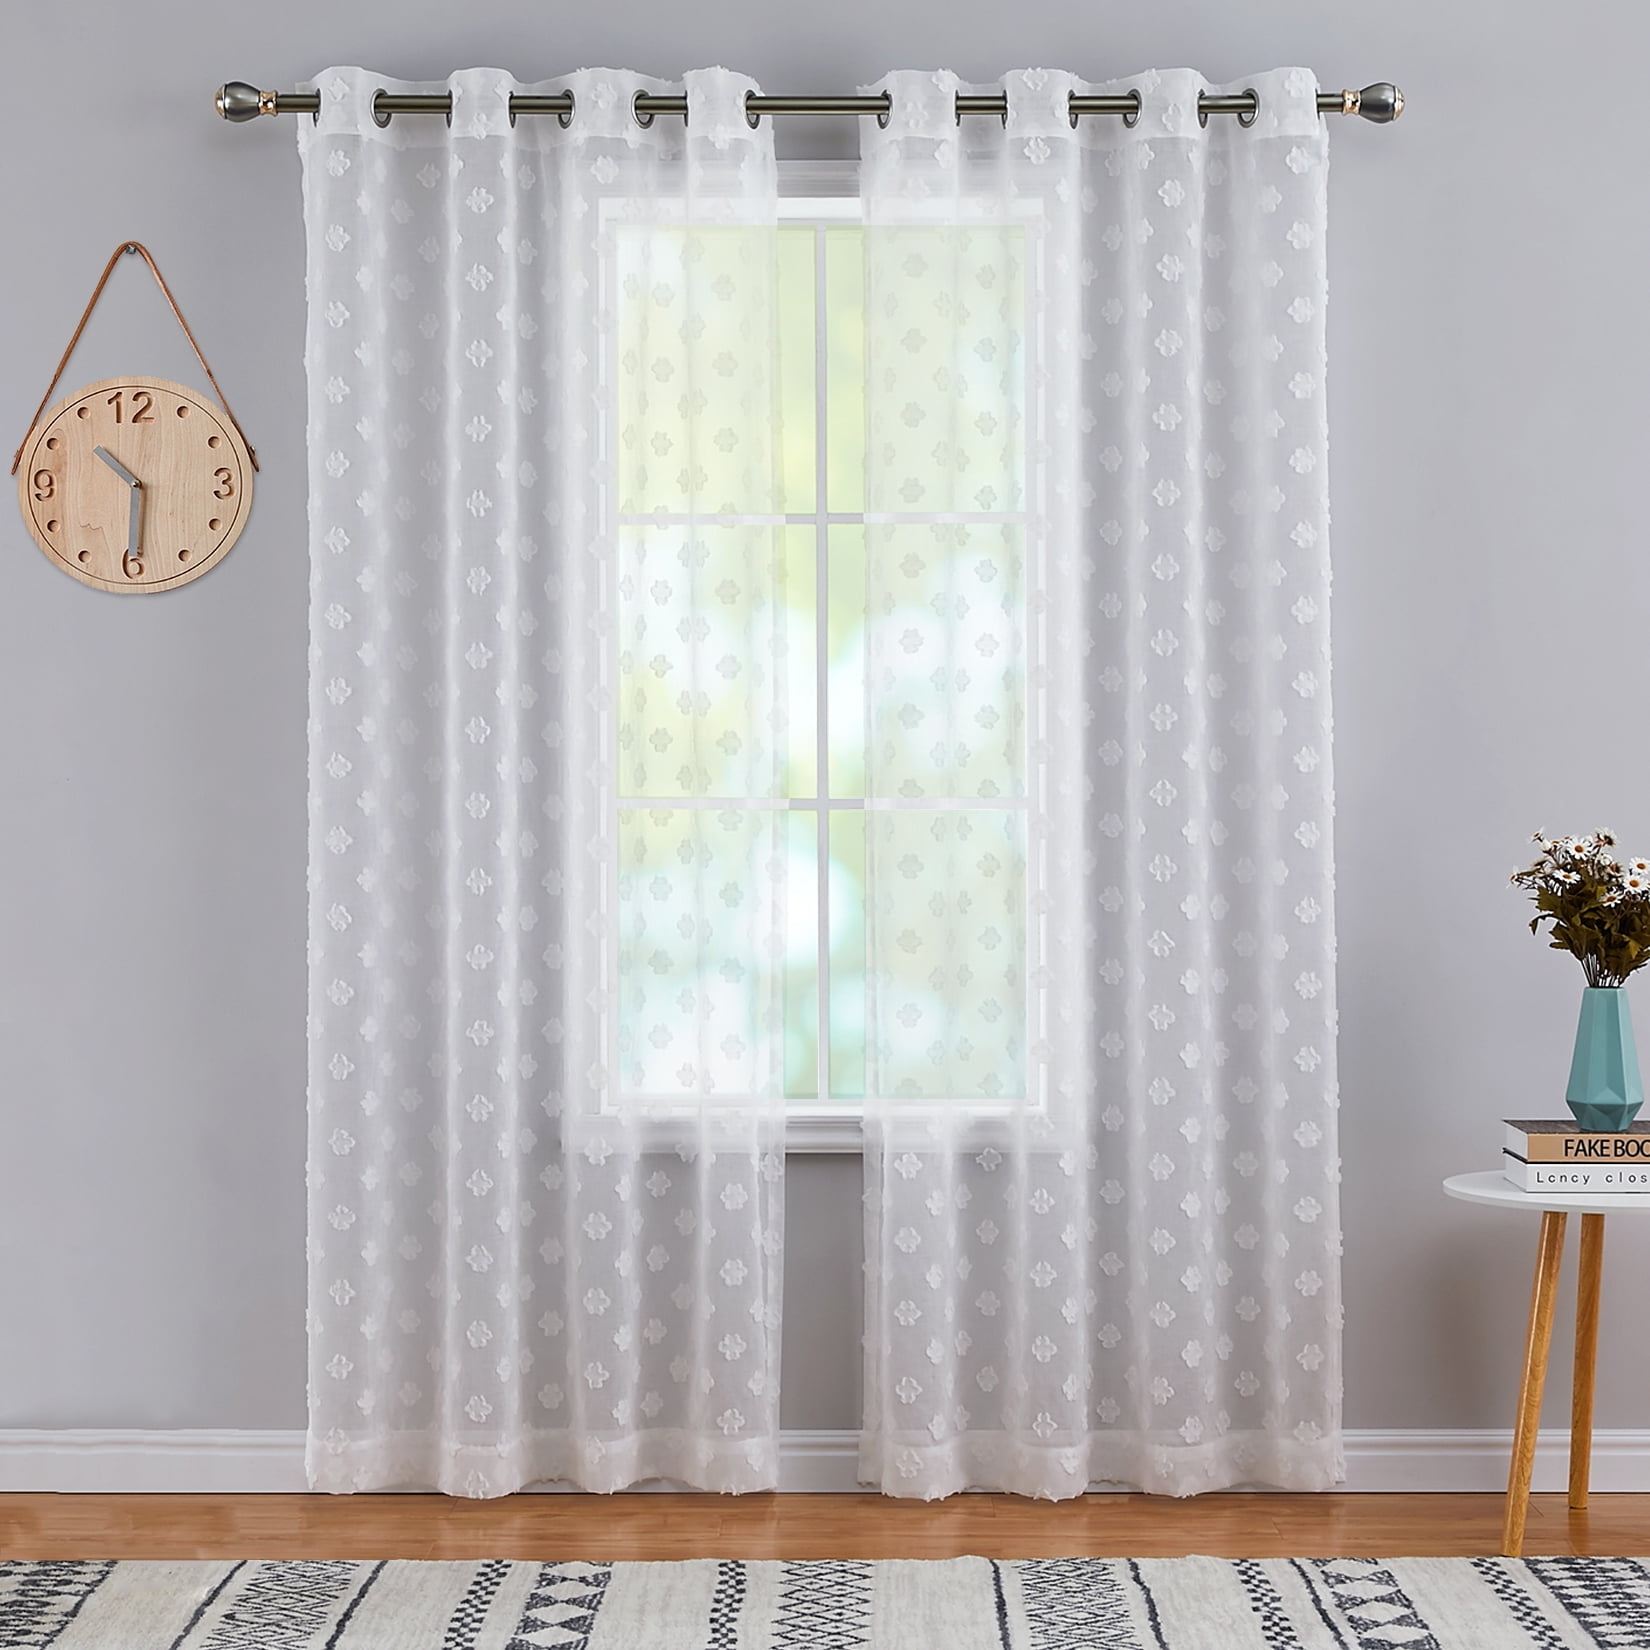 2 Panel Floral Jacquard Grommet Sheer Voile Livingroom Bedroom Window Curtains 